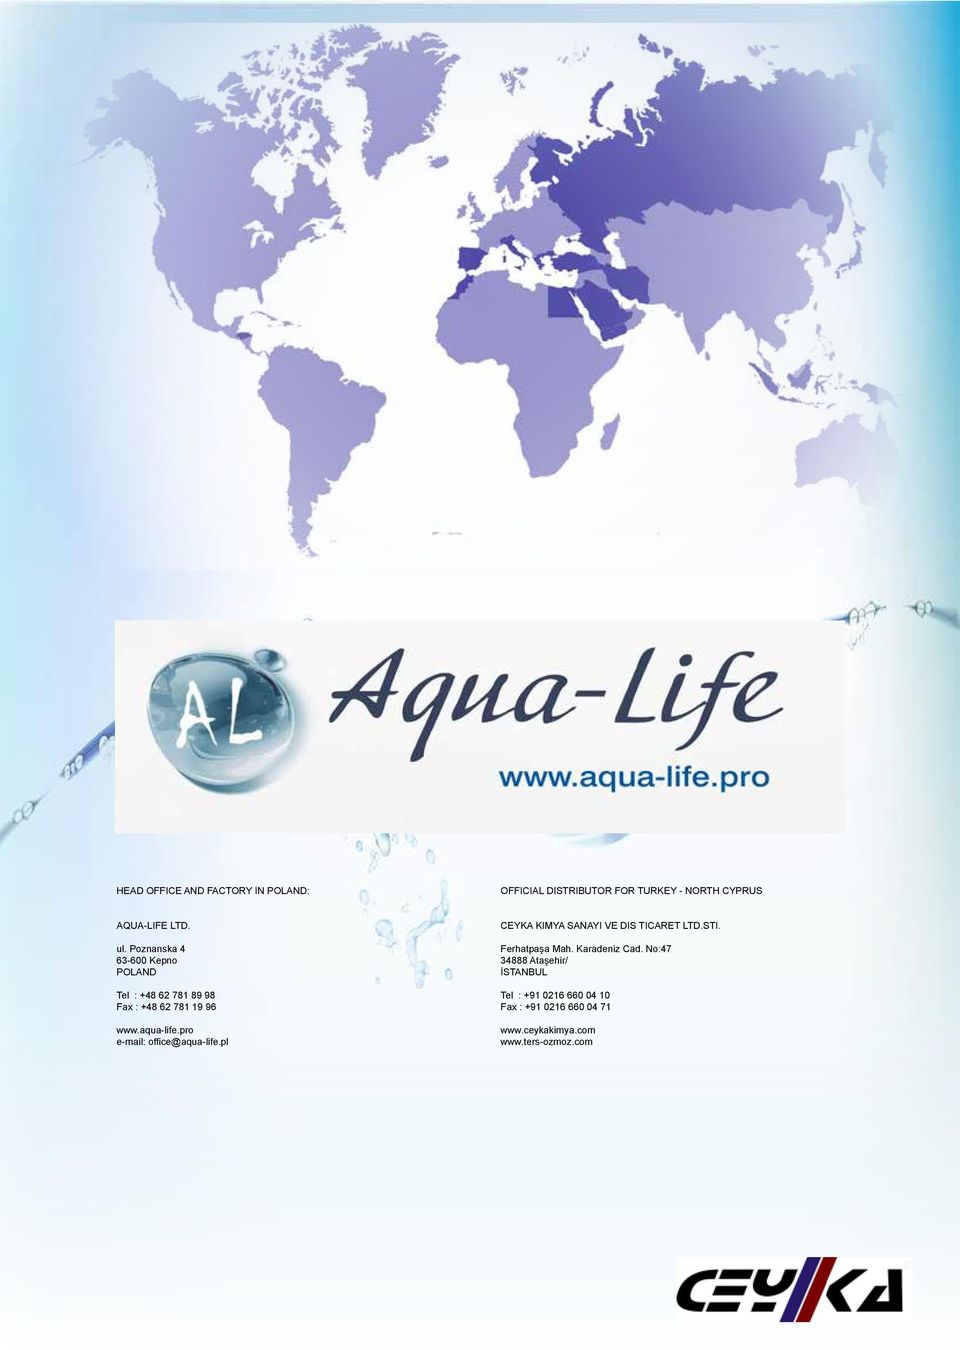 pro e-mail: office@aqua-life.pl CEYKA KIMYA SANAYI VE DIS TICARET LTD.STI. Ferhatpaşa Mah. Karadeniz Cad.